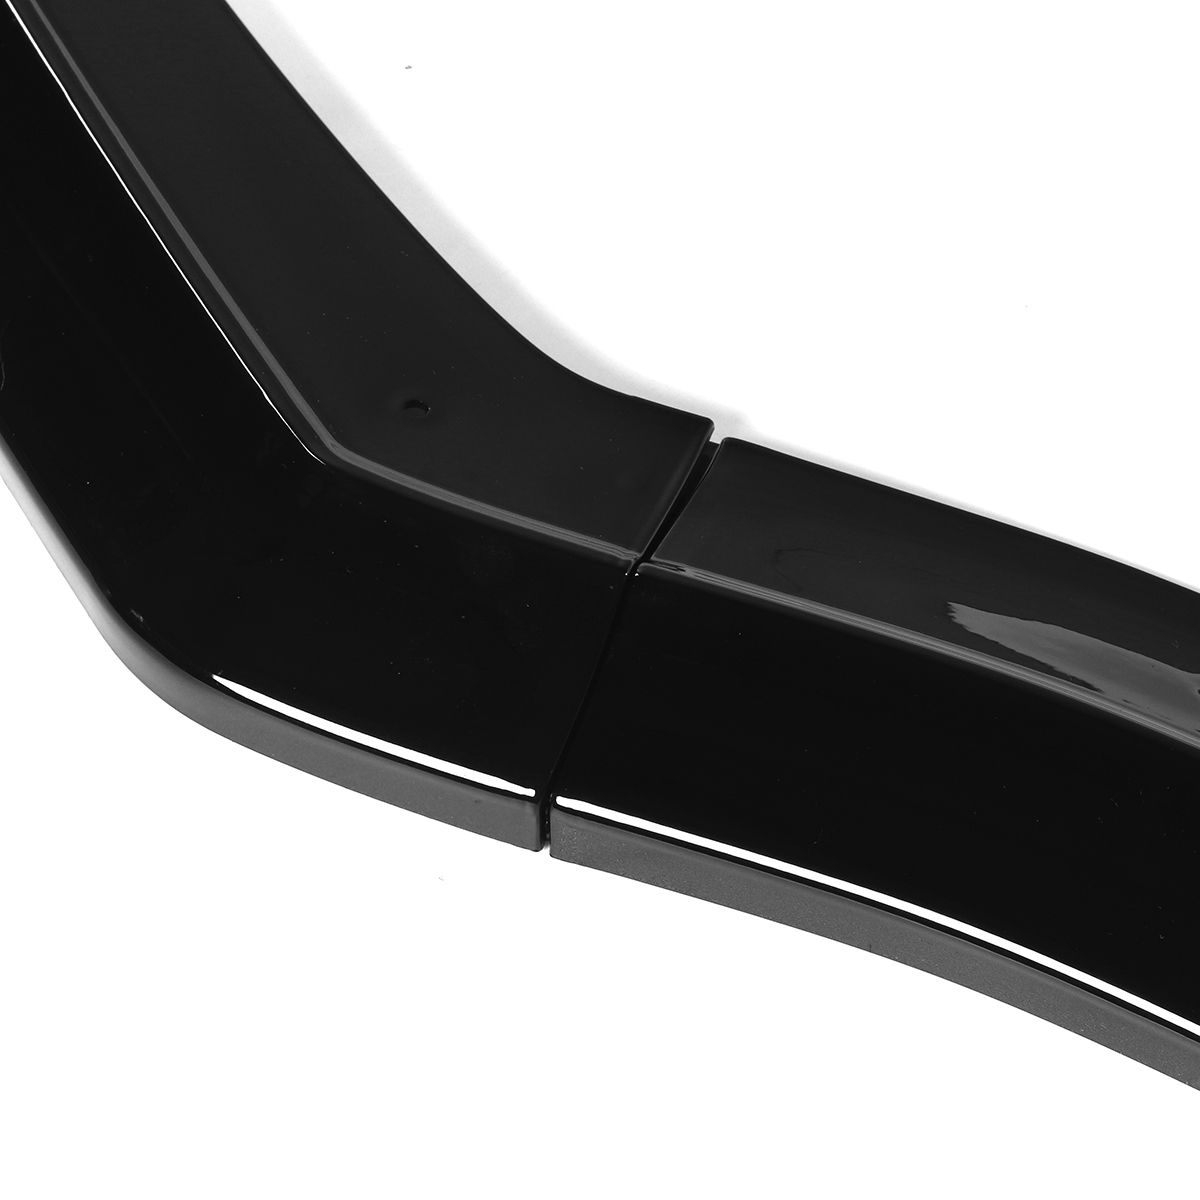 3Pcs-Glossy-Black-Front-Lip-Chin-Bumper-Body-Kits-For-Subaru-WRX-STI-2015-2019-1684878